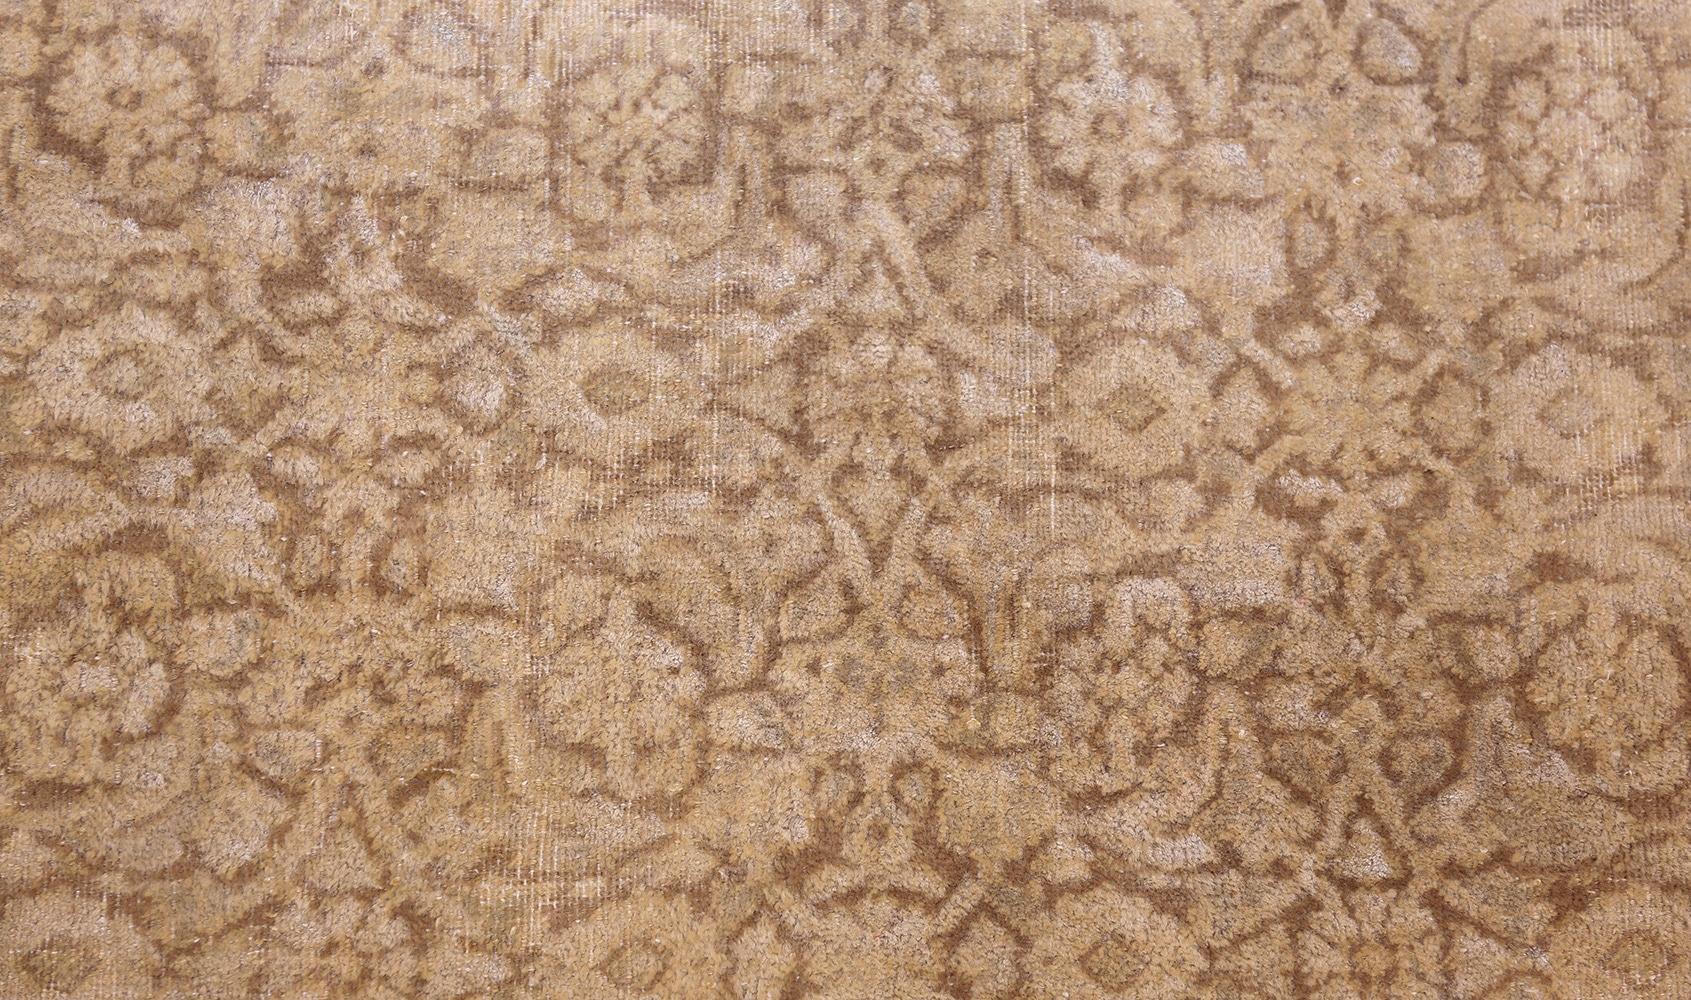 Antique Persian Tabriz Carpet. Size: 13' 7